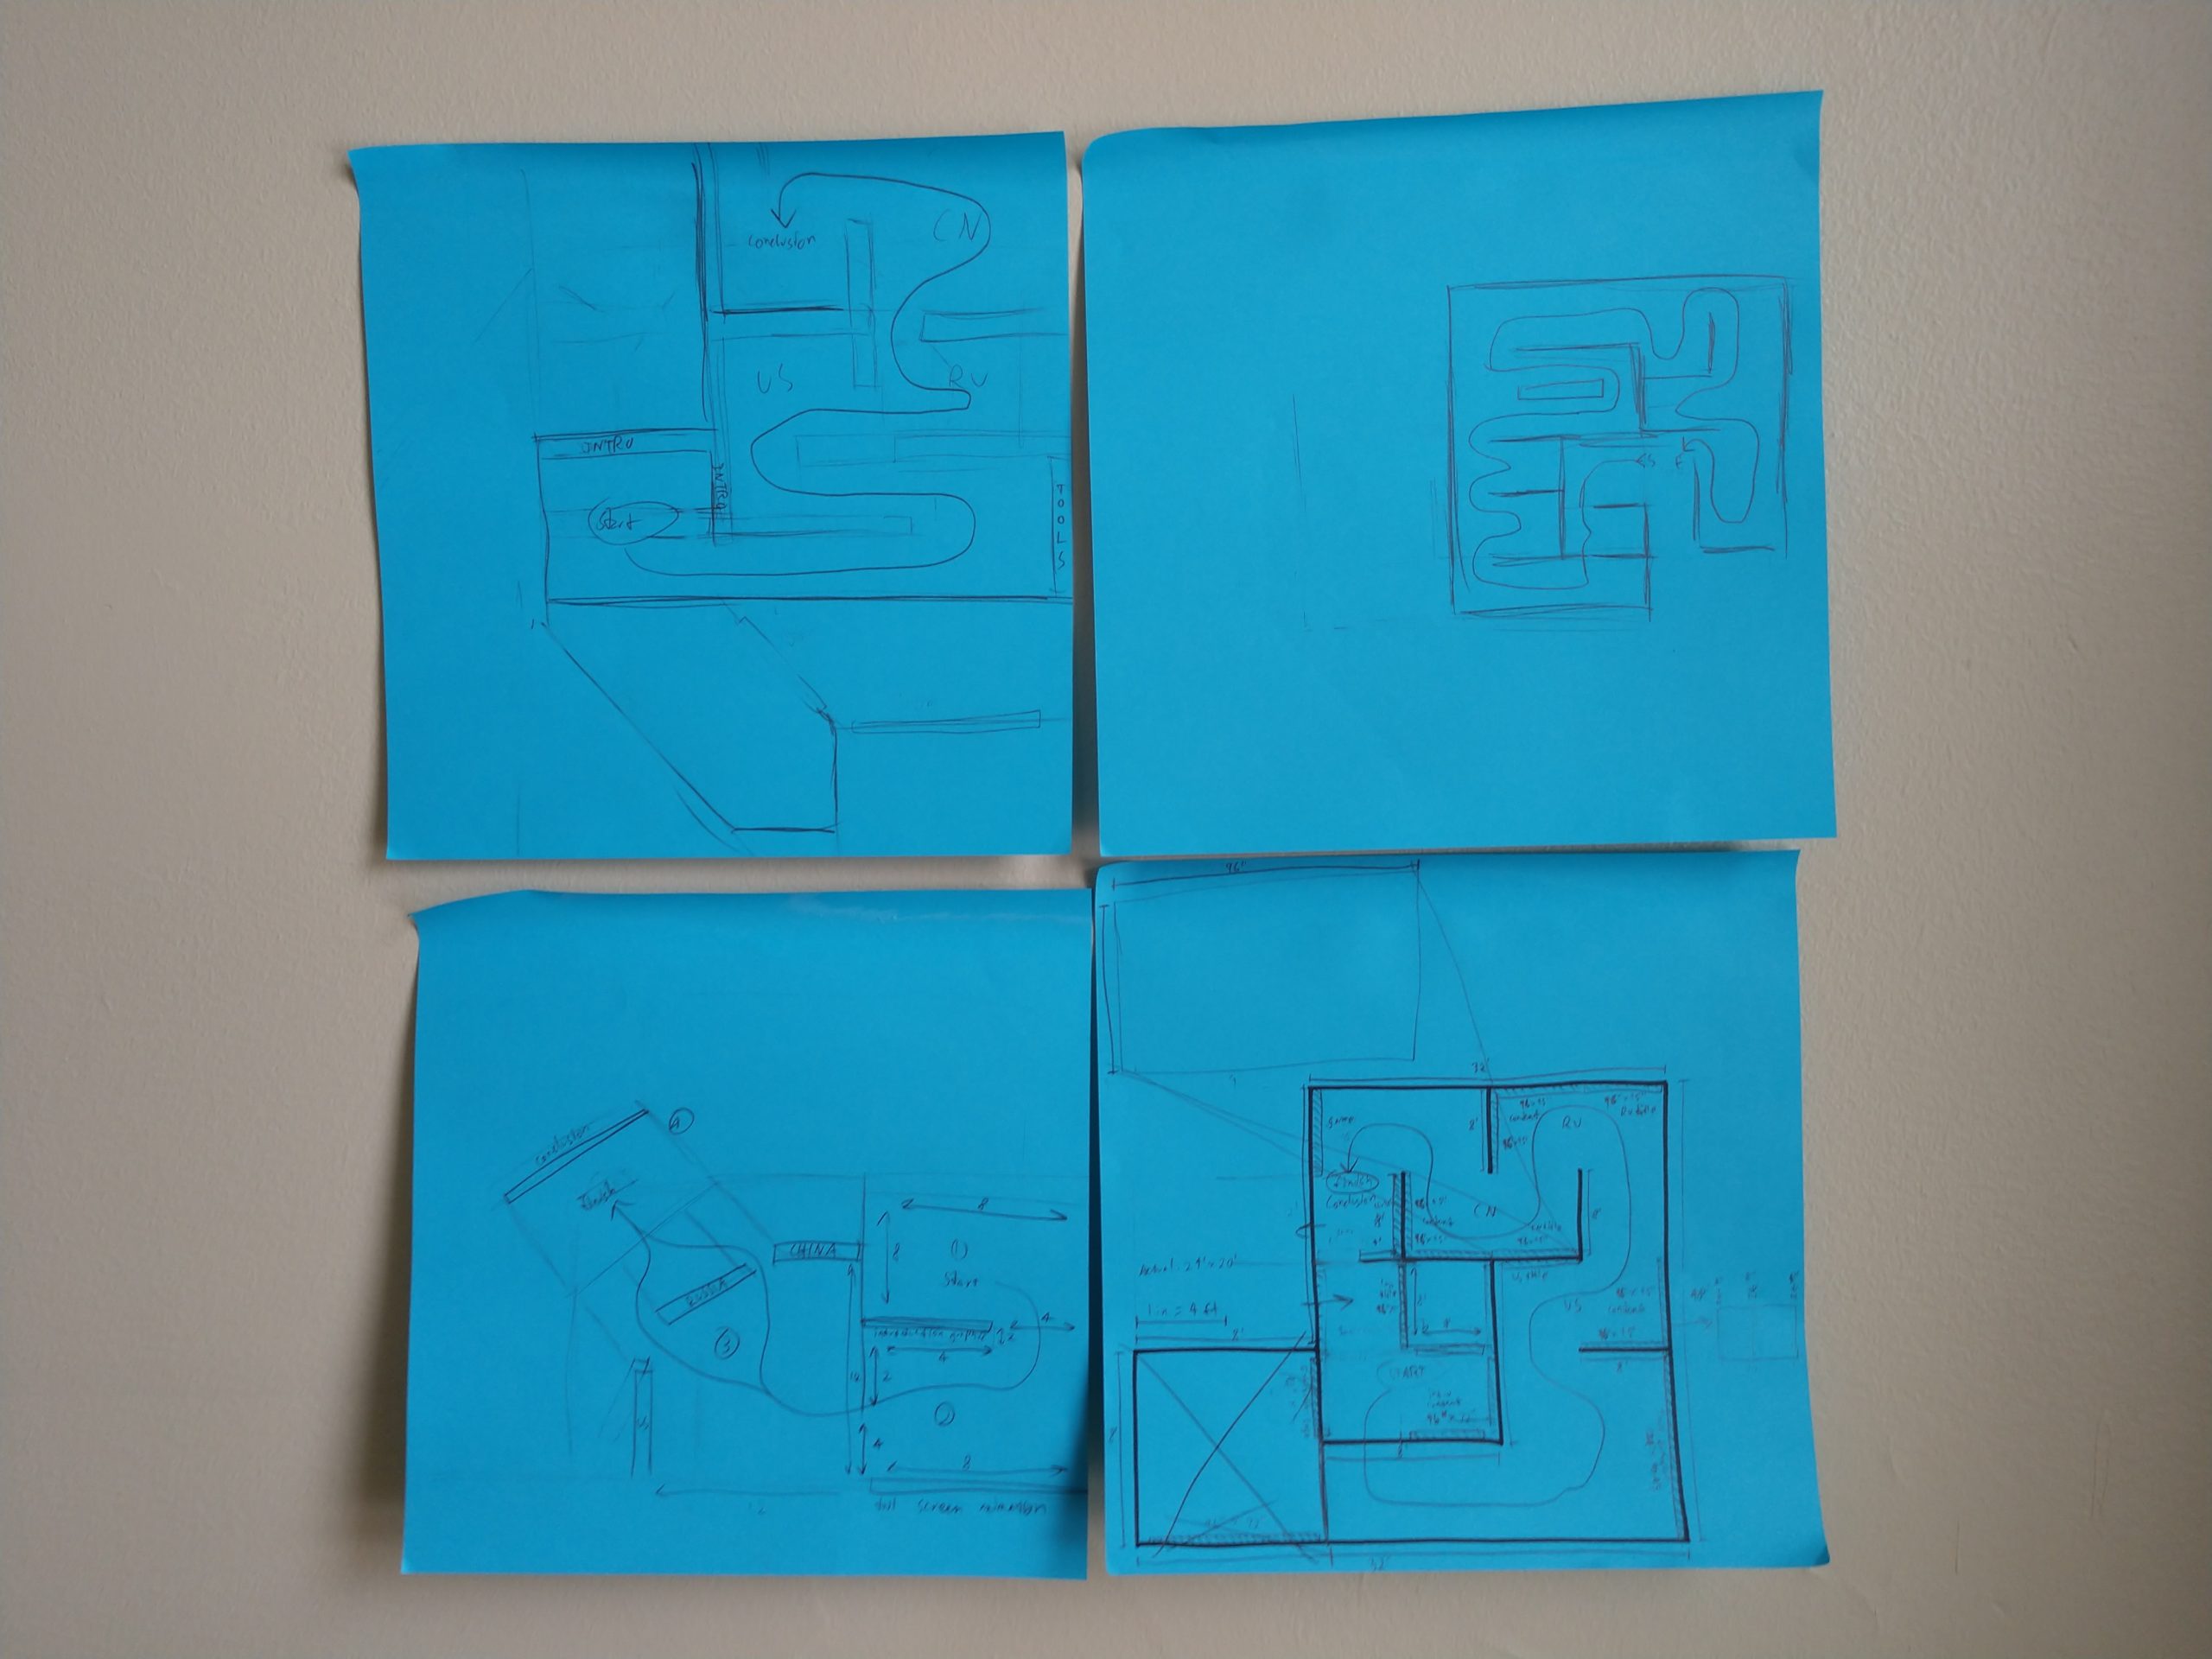 Early floorplan sketches